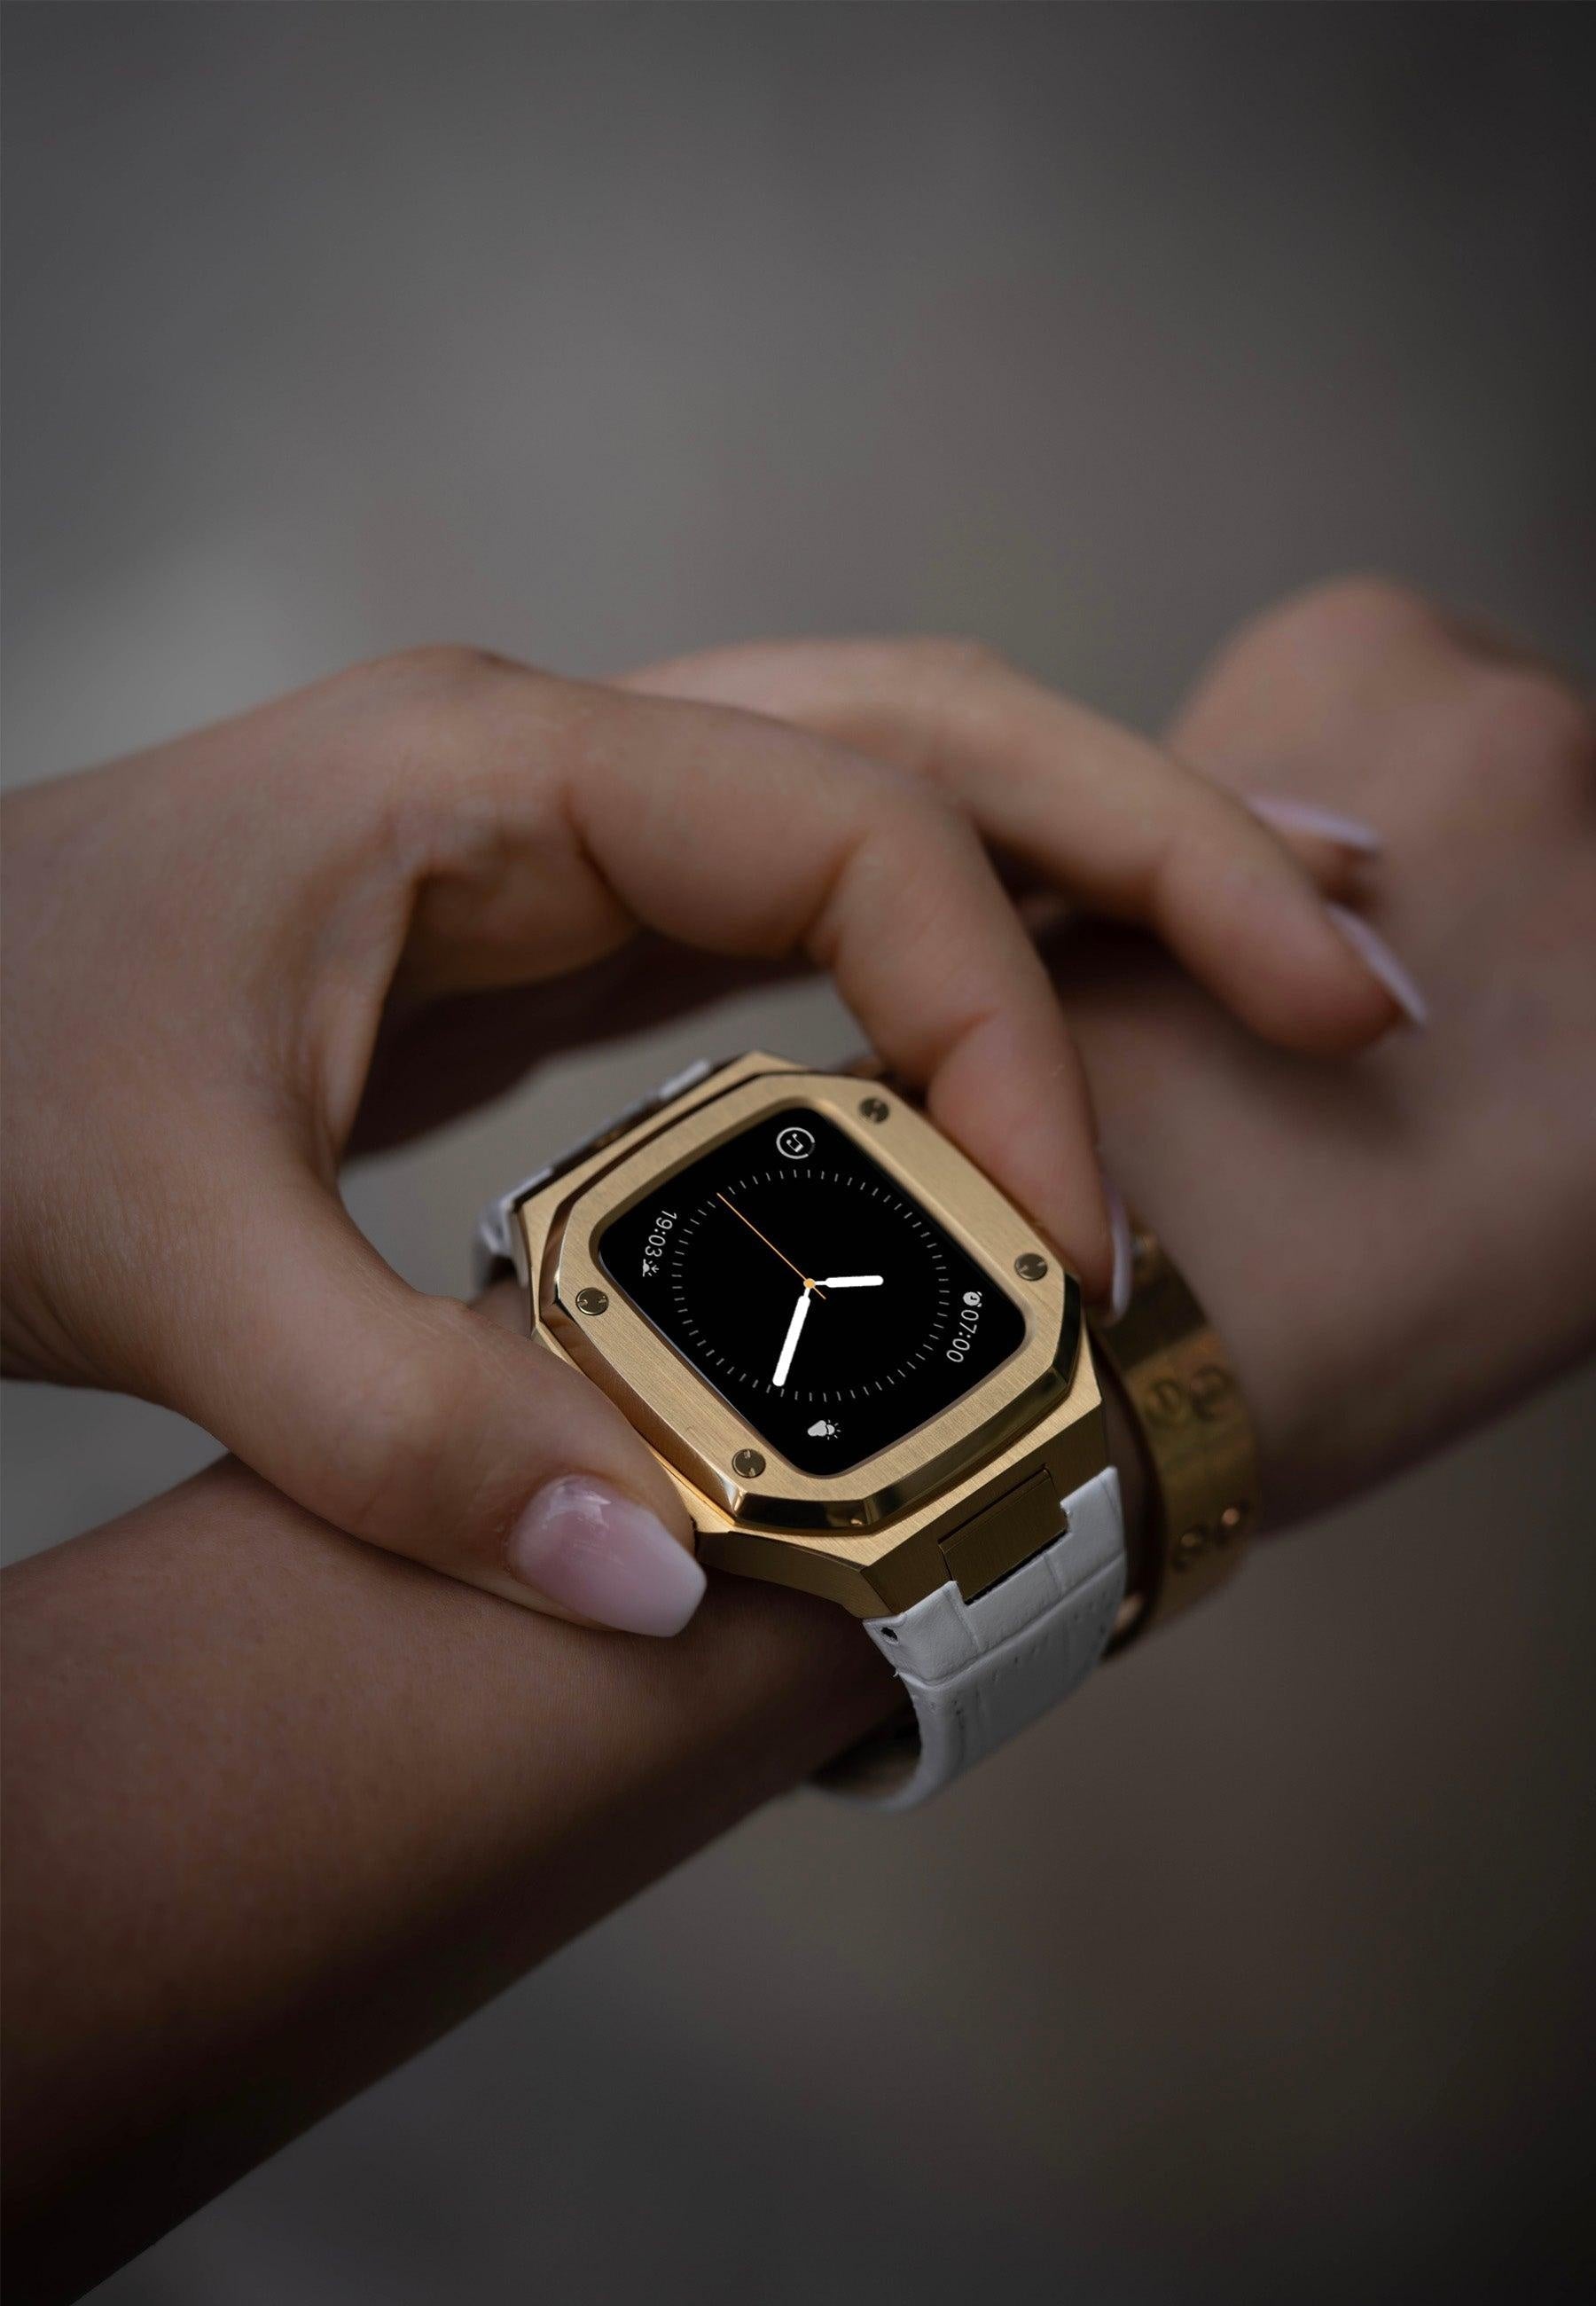 Shop latest trending White/Gold color Golden Concept Apple Watch